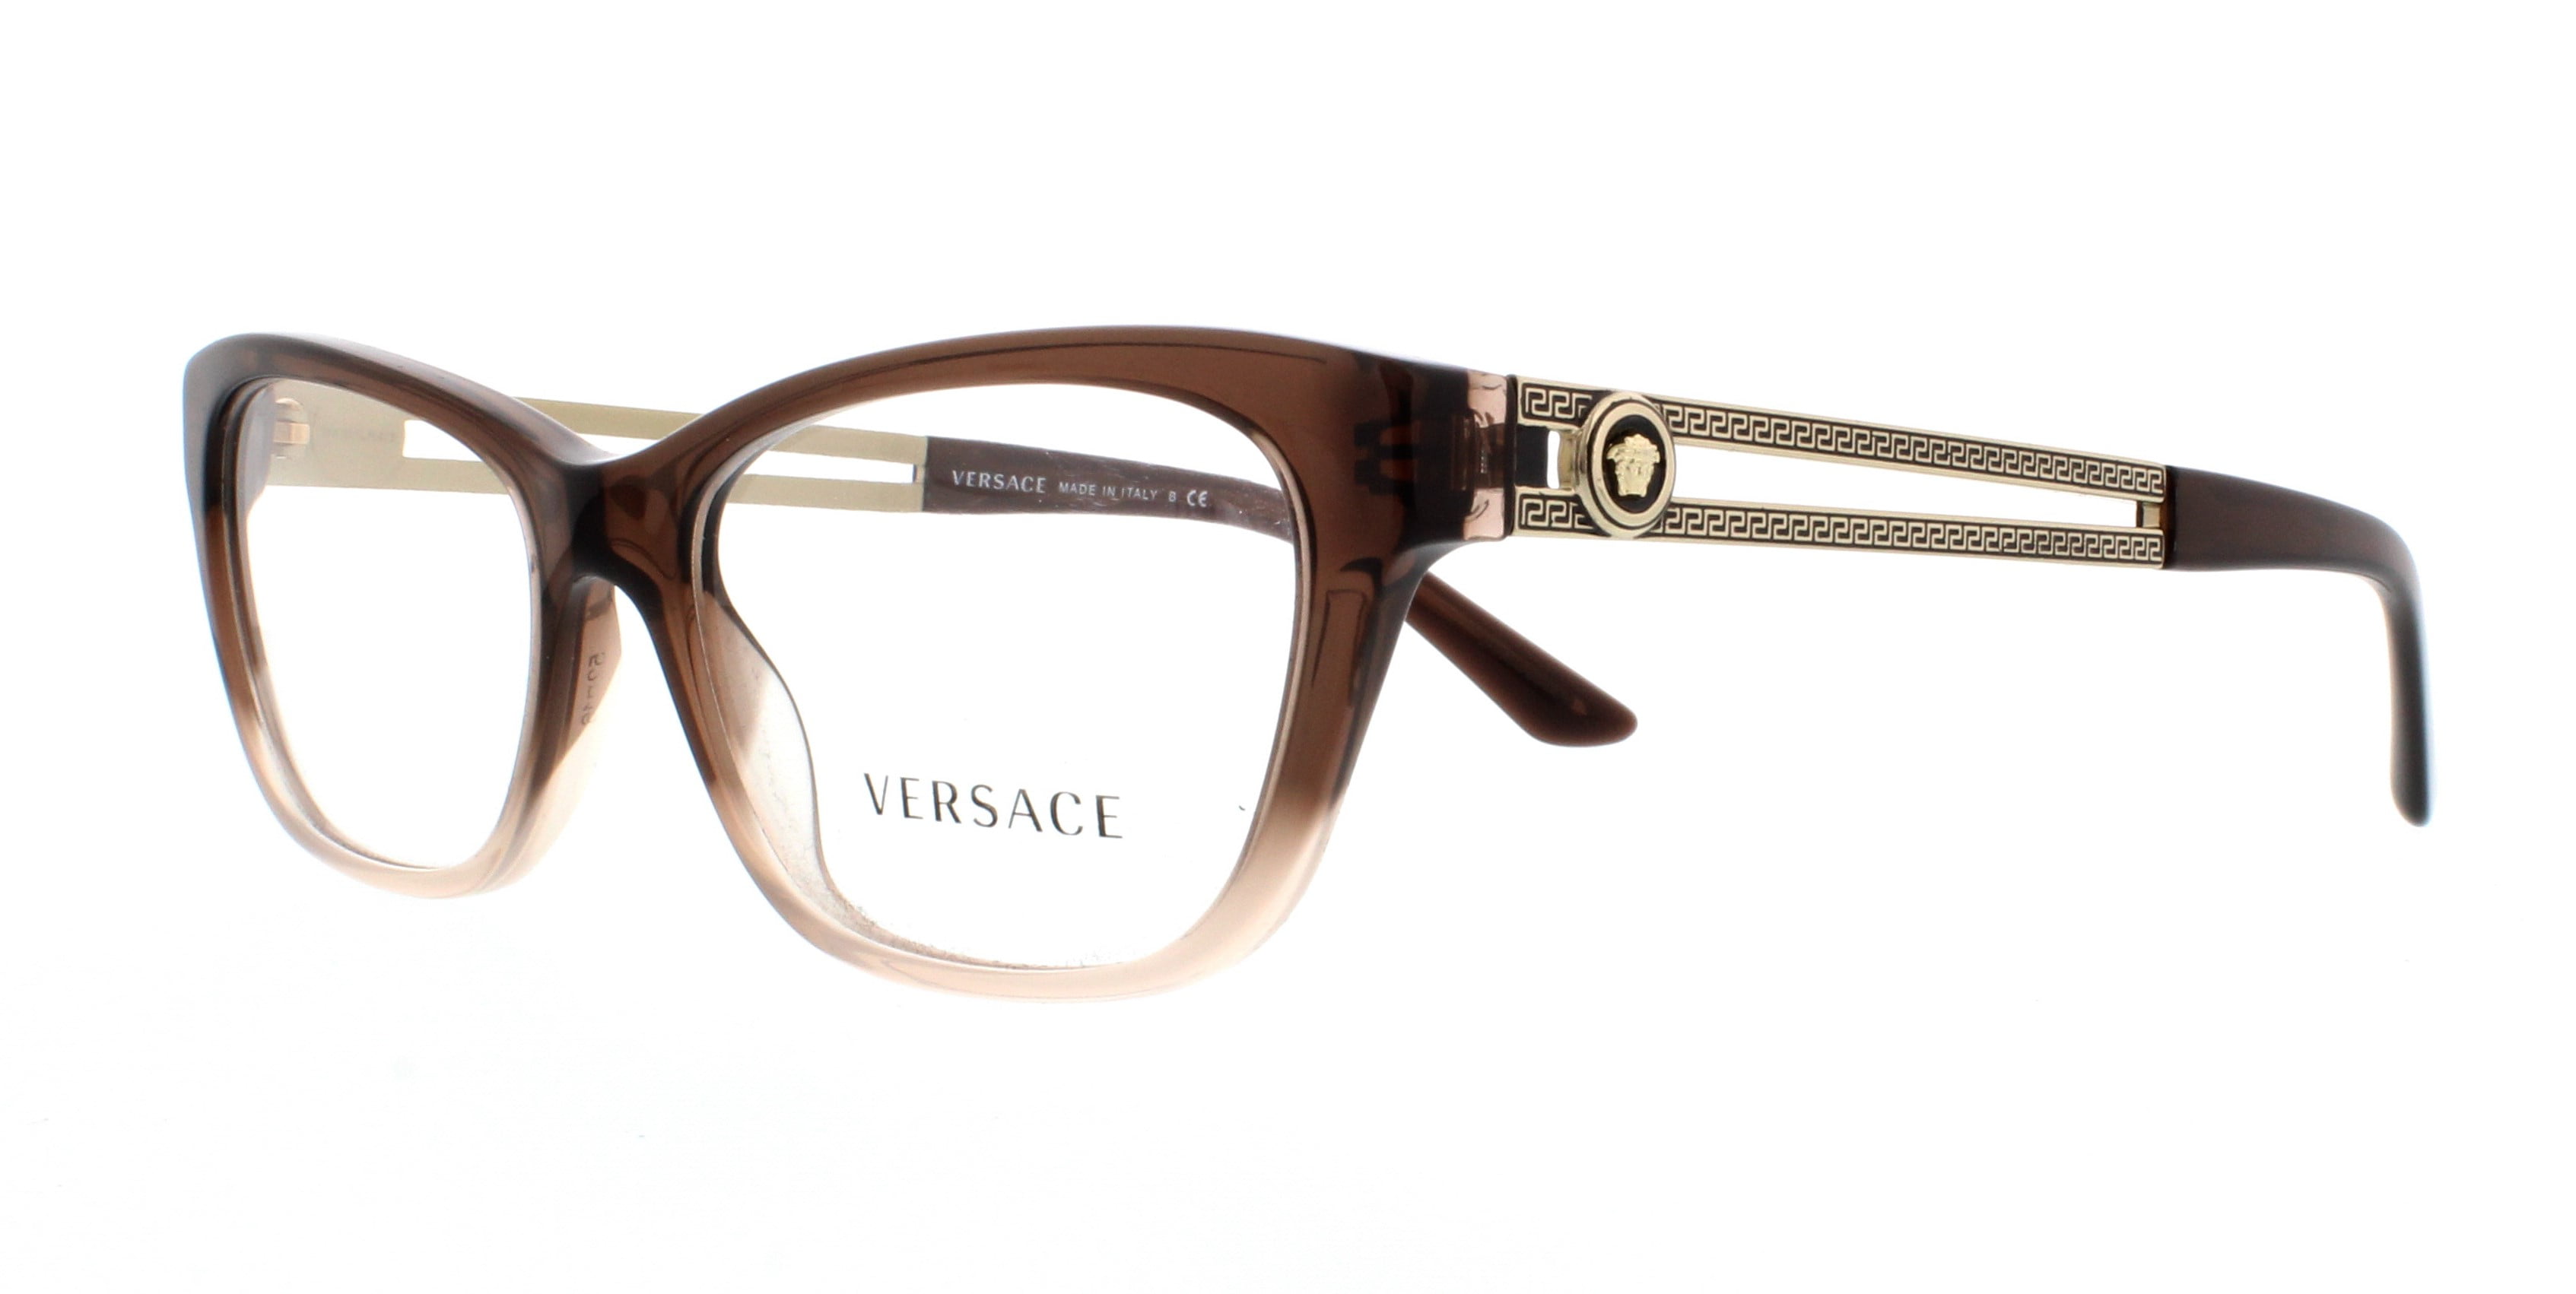 VERSACE Eyeglasses VE 3220 5165 Brown/Light Brown Transparent 52MM